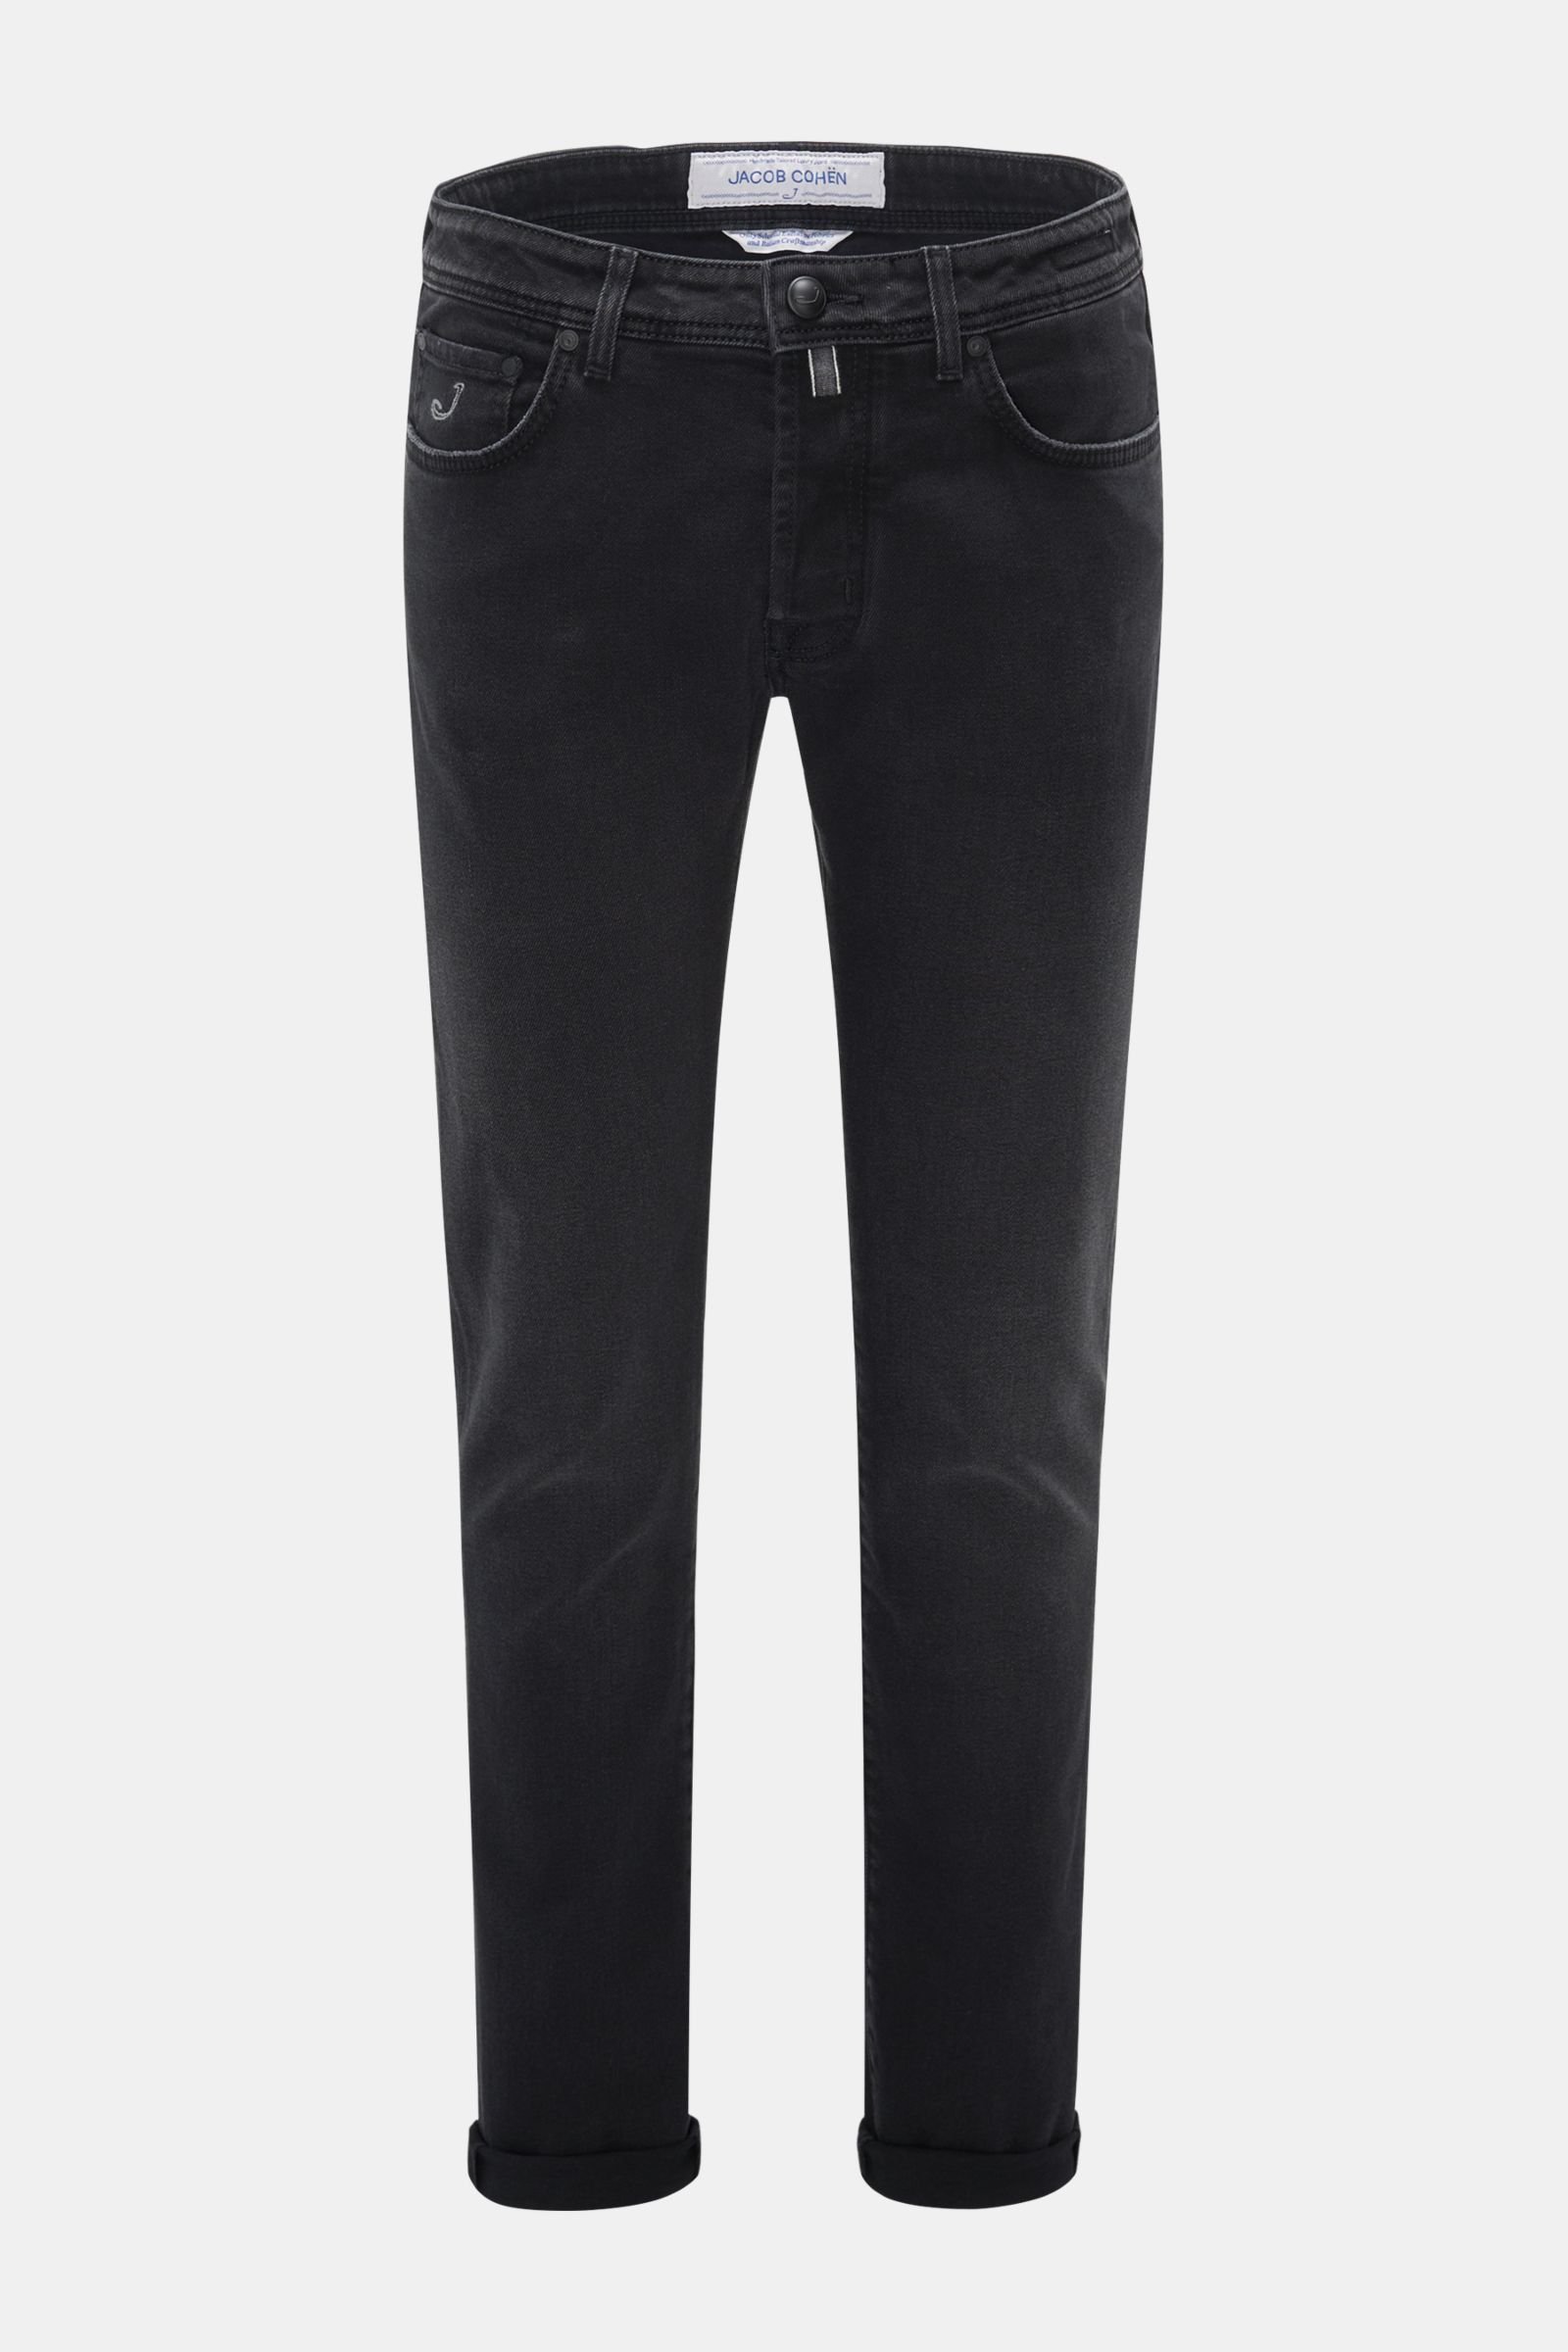 Jeans 'J688 Comfort Slim Fit' black